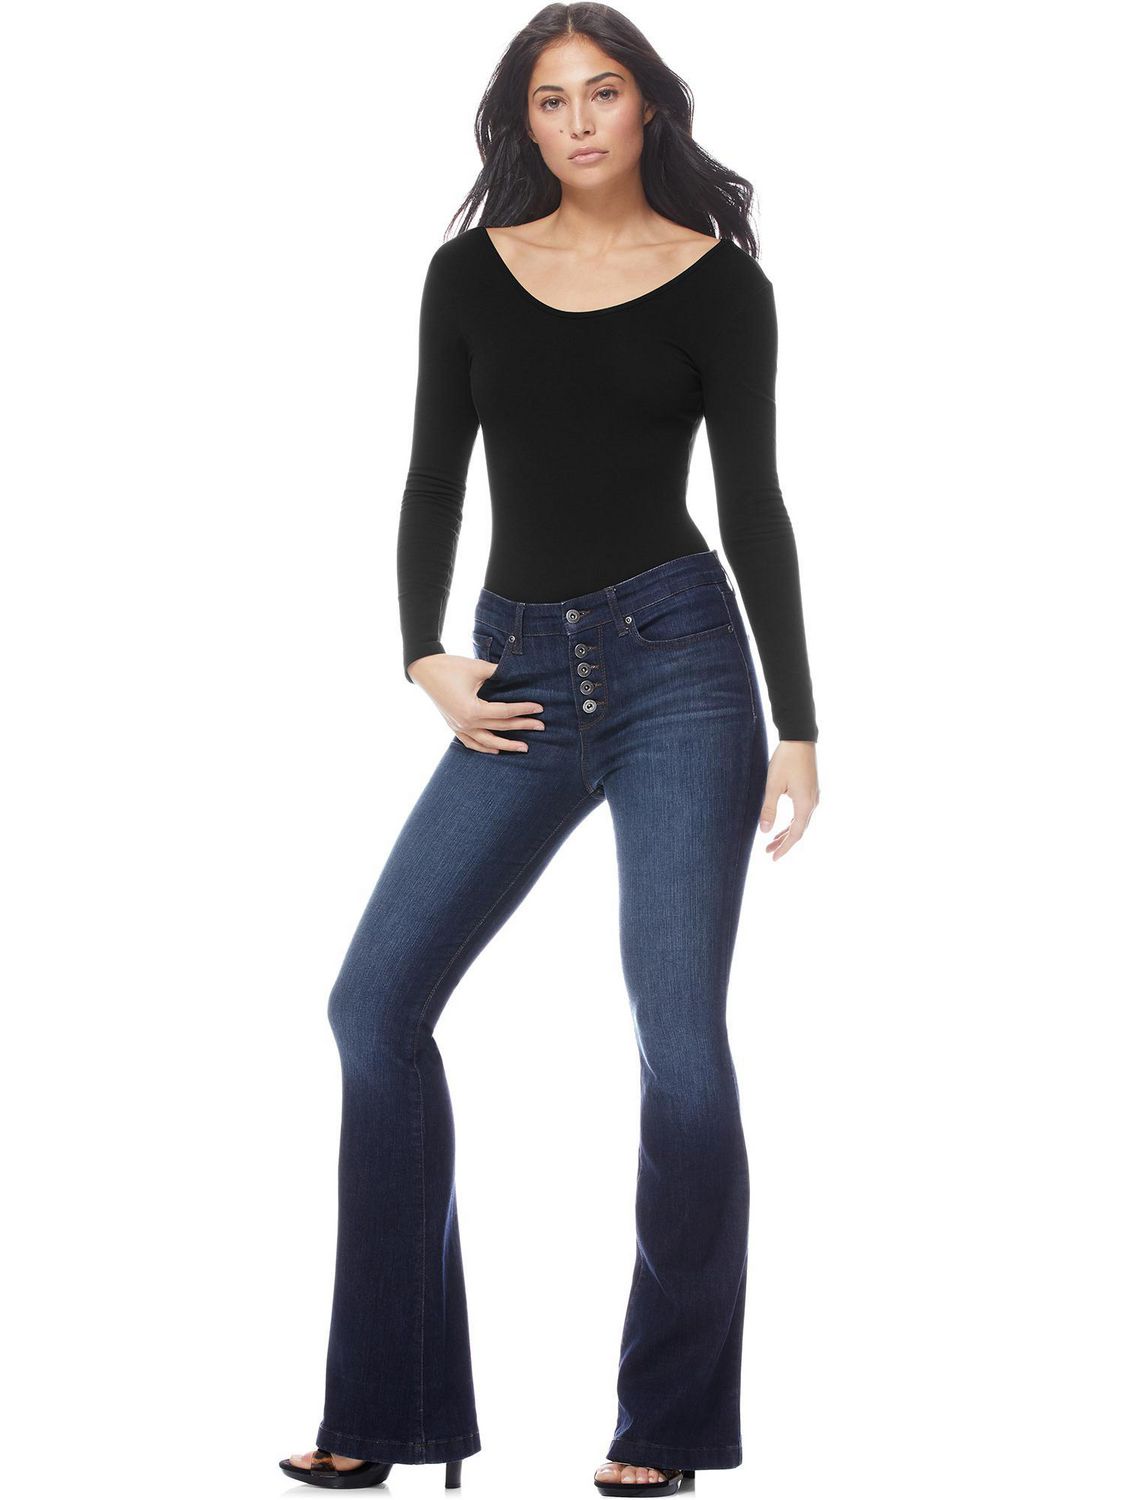 Sofia Vergara's Walmart Bootcut Jeans & Floral Wrap Shirt Are So 2000s